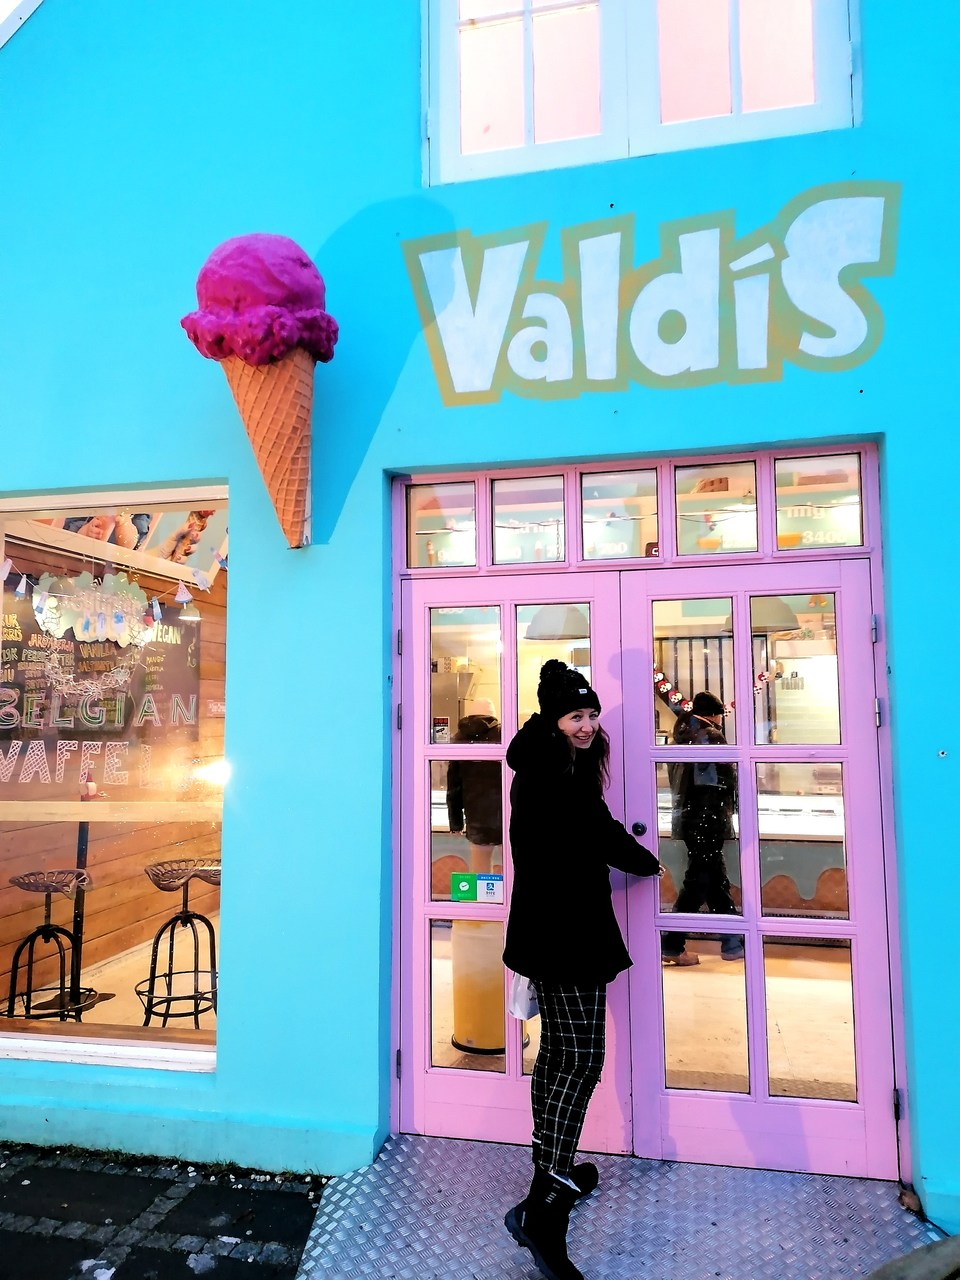 VALDIS - ICE CREAM BAR